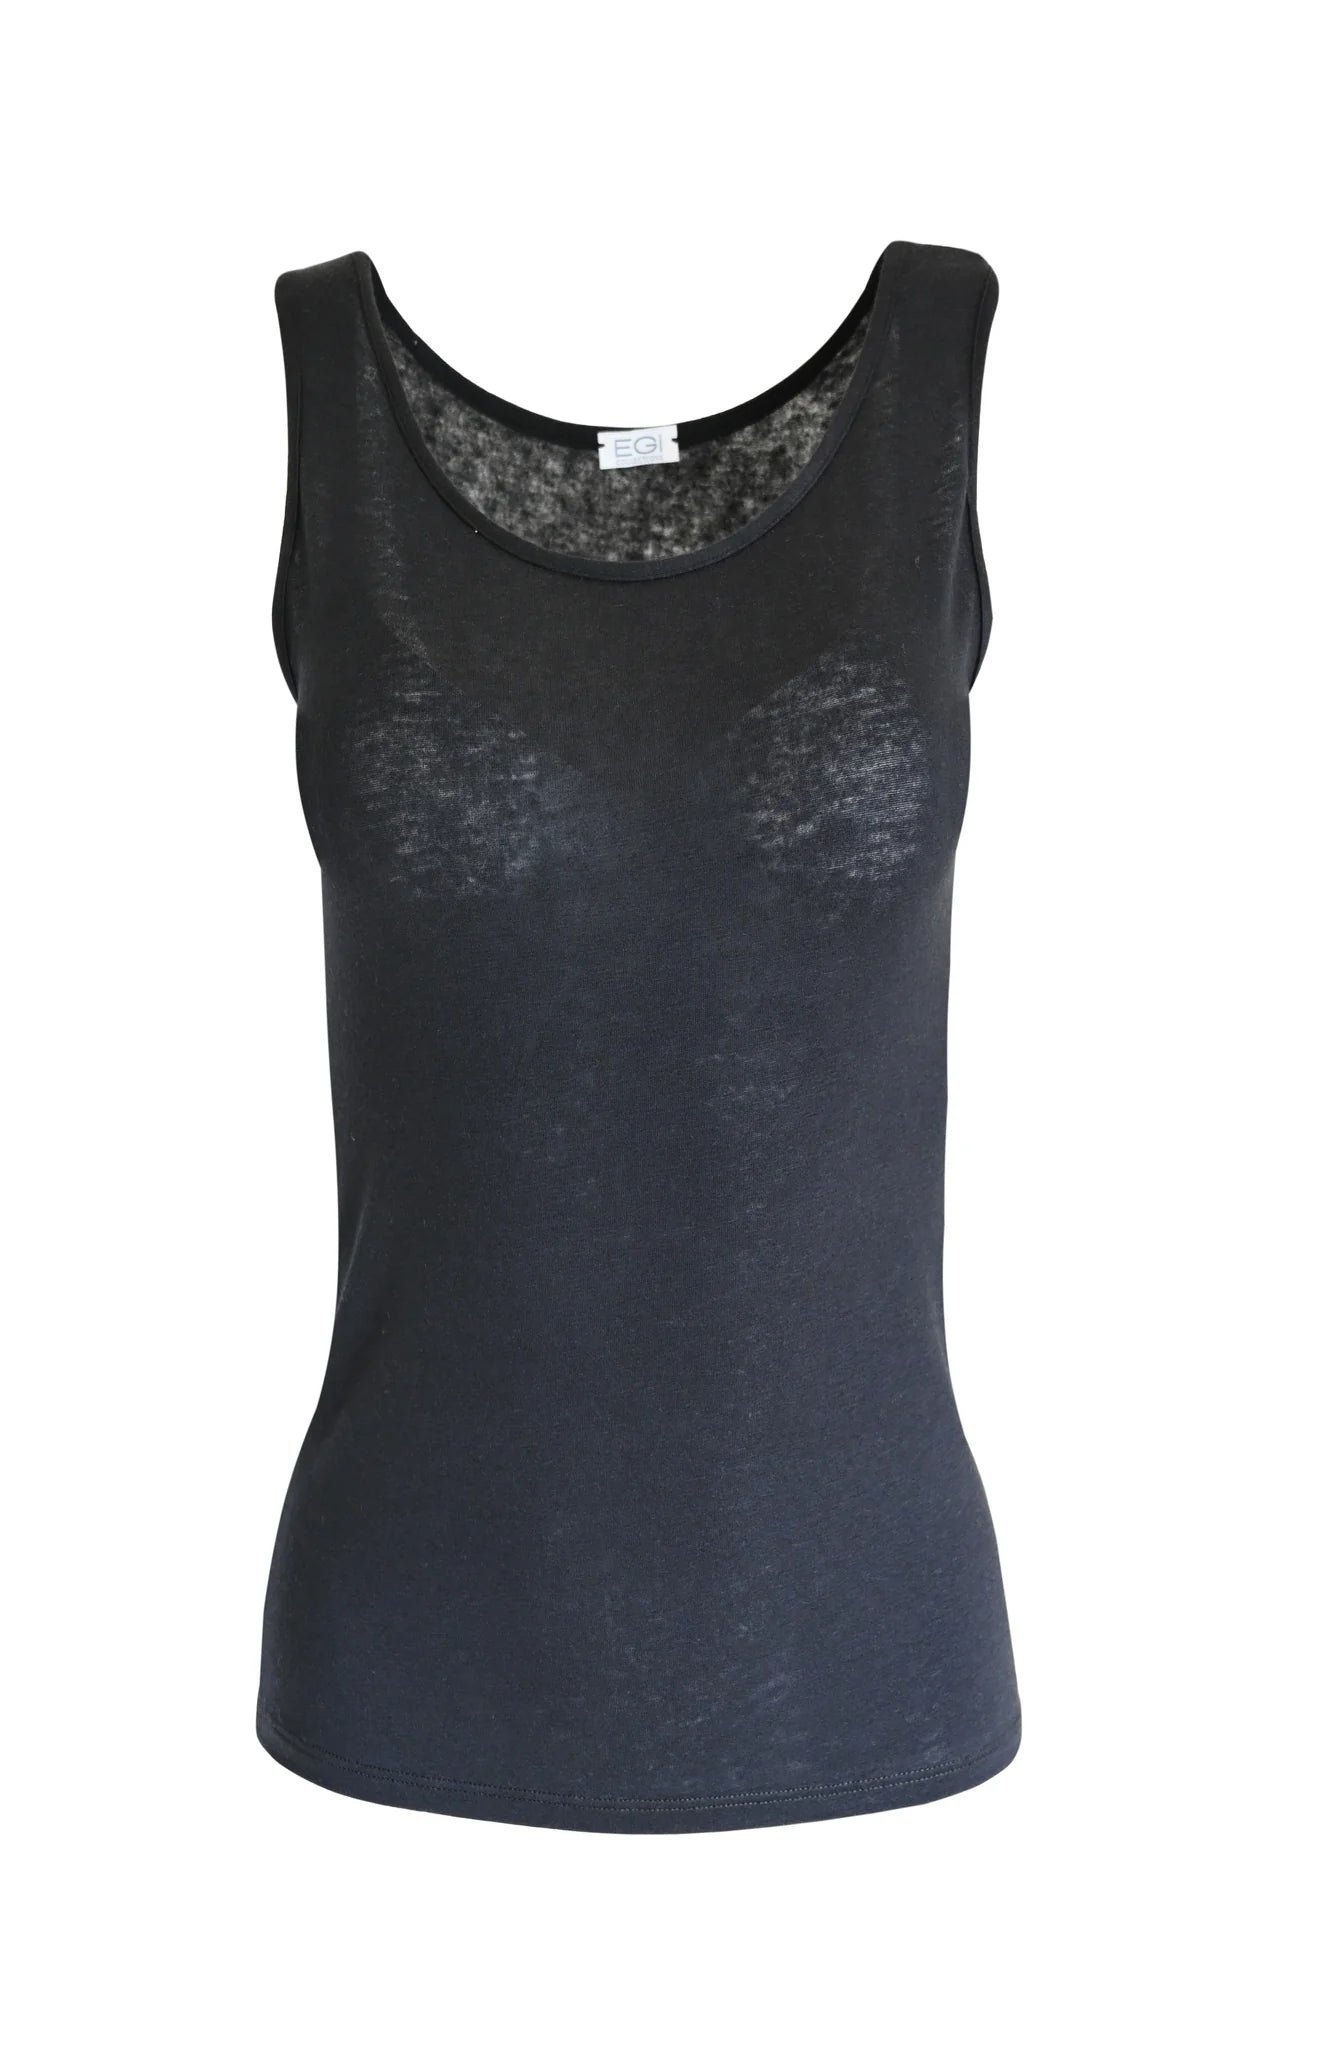 Camiseta de tirantes ultraligera de Modal y Cashmere para mujer - Made in Italy - 5219